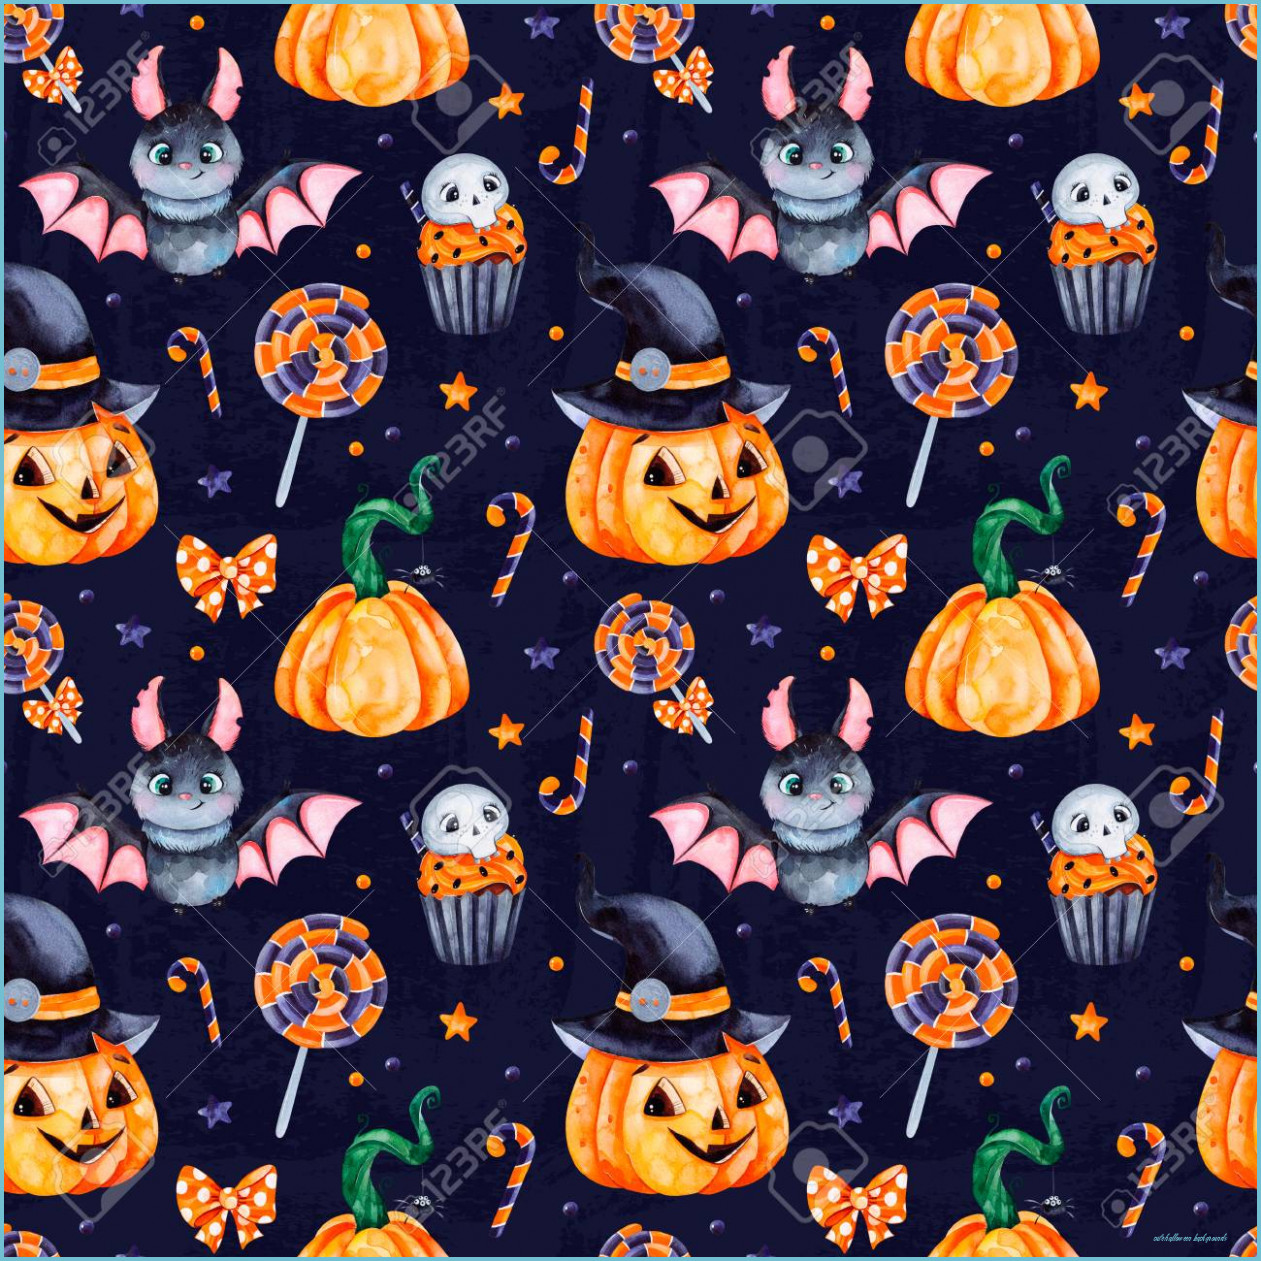 Free Download Cute Watercolor Halloween Seamless Pattern Dark Halloween Background